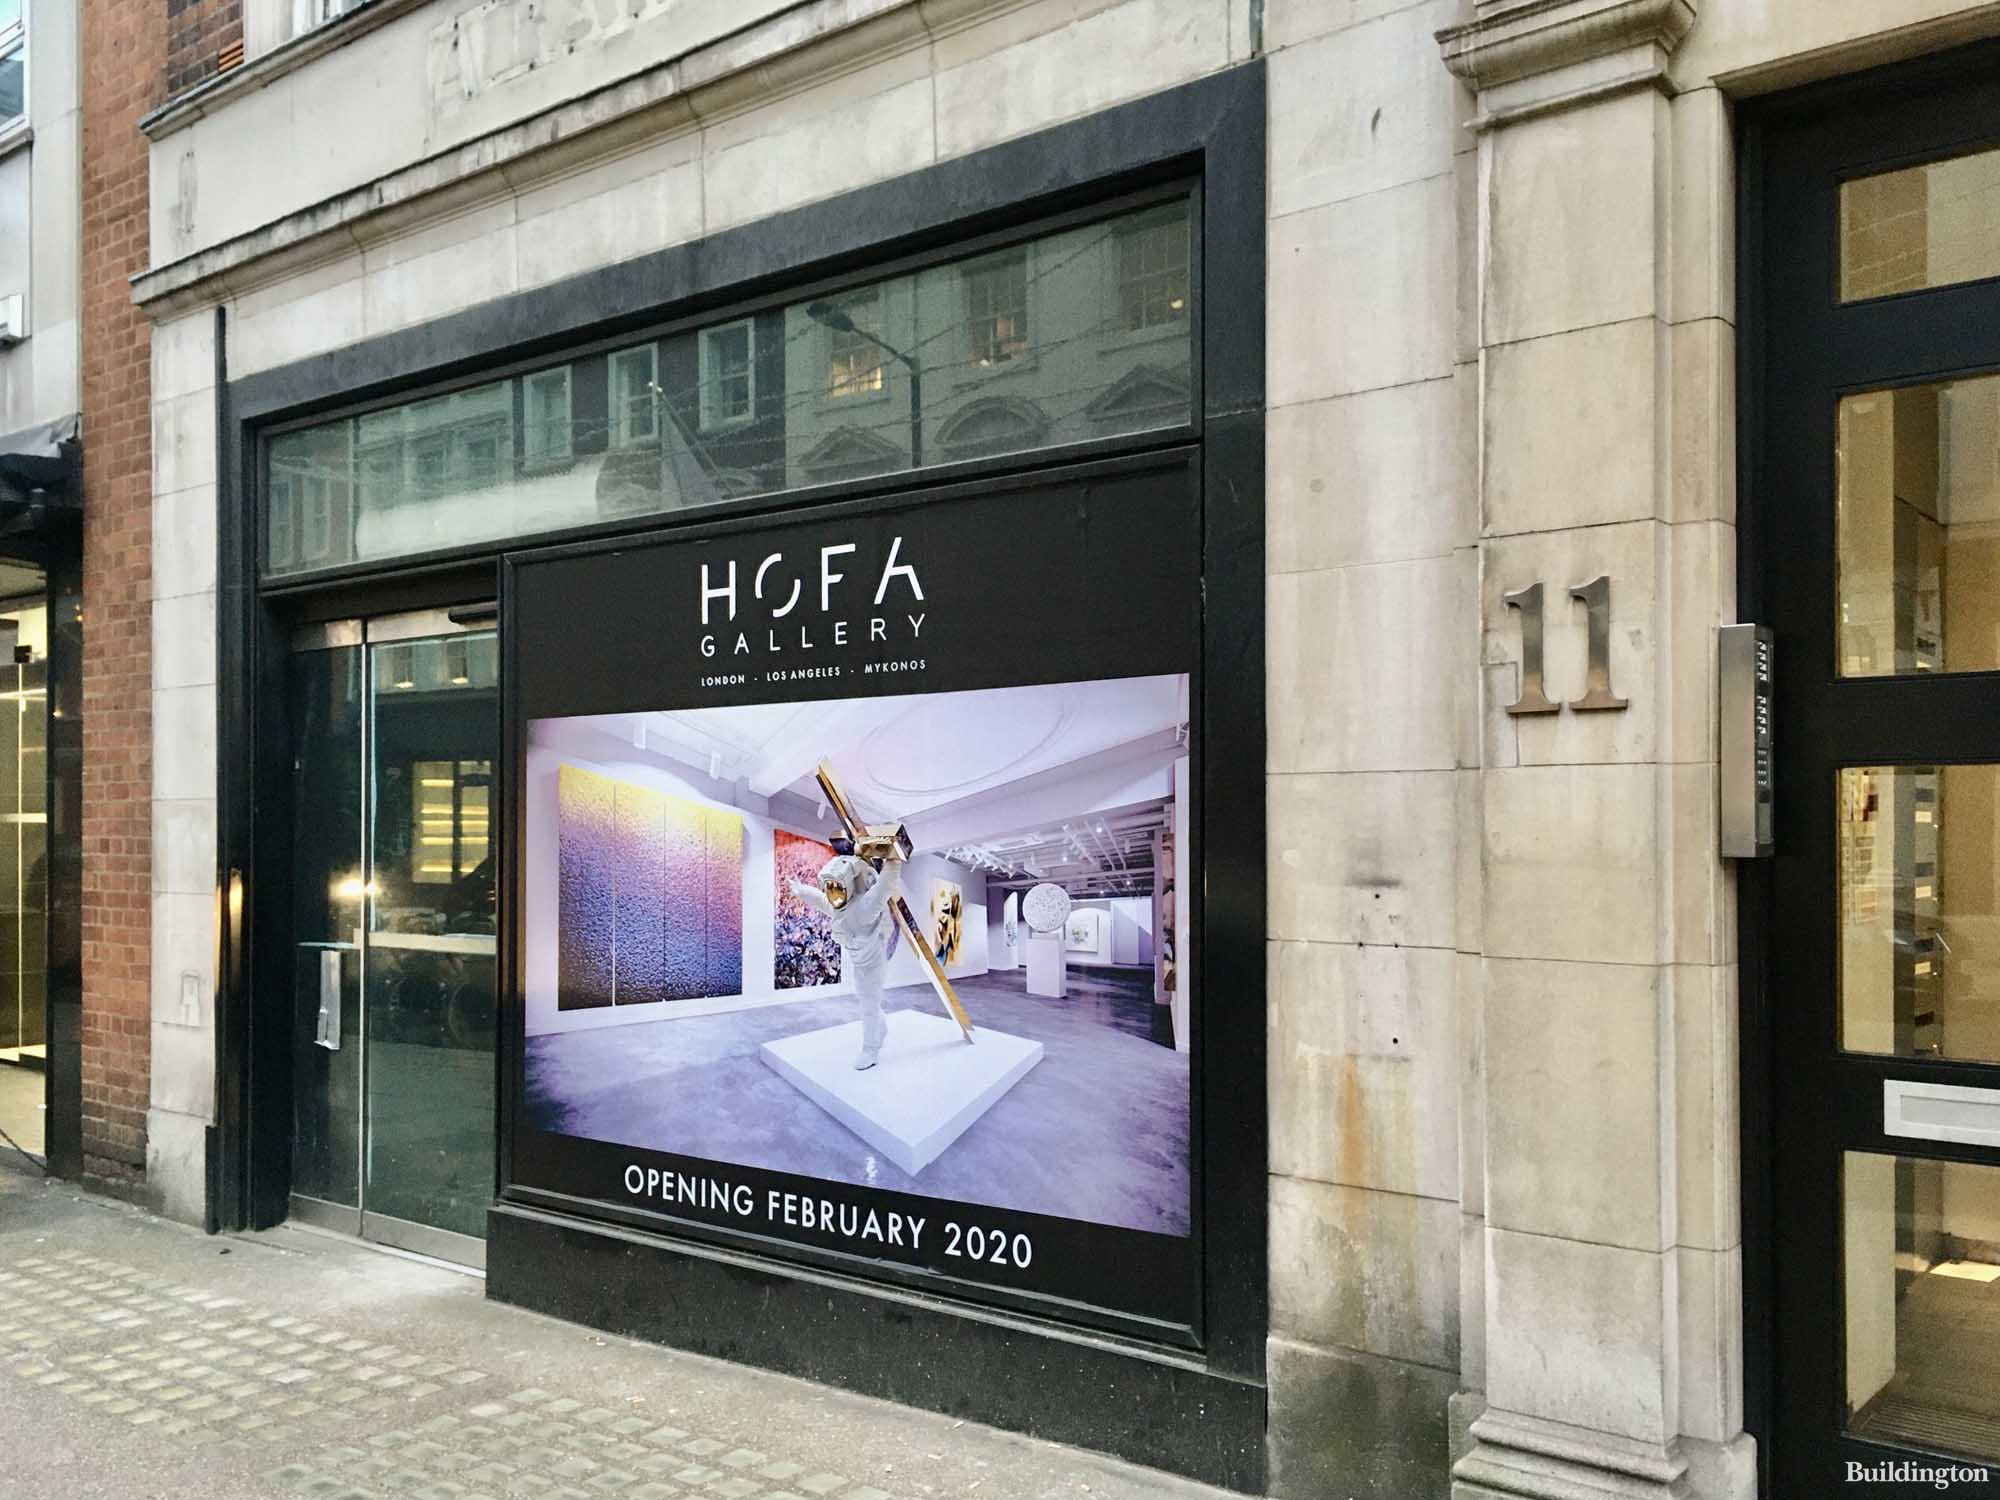 Hofa Gallery opening in February 2020 at 11 Bruton Street building in Mayfair, London W1.